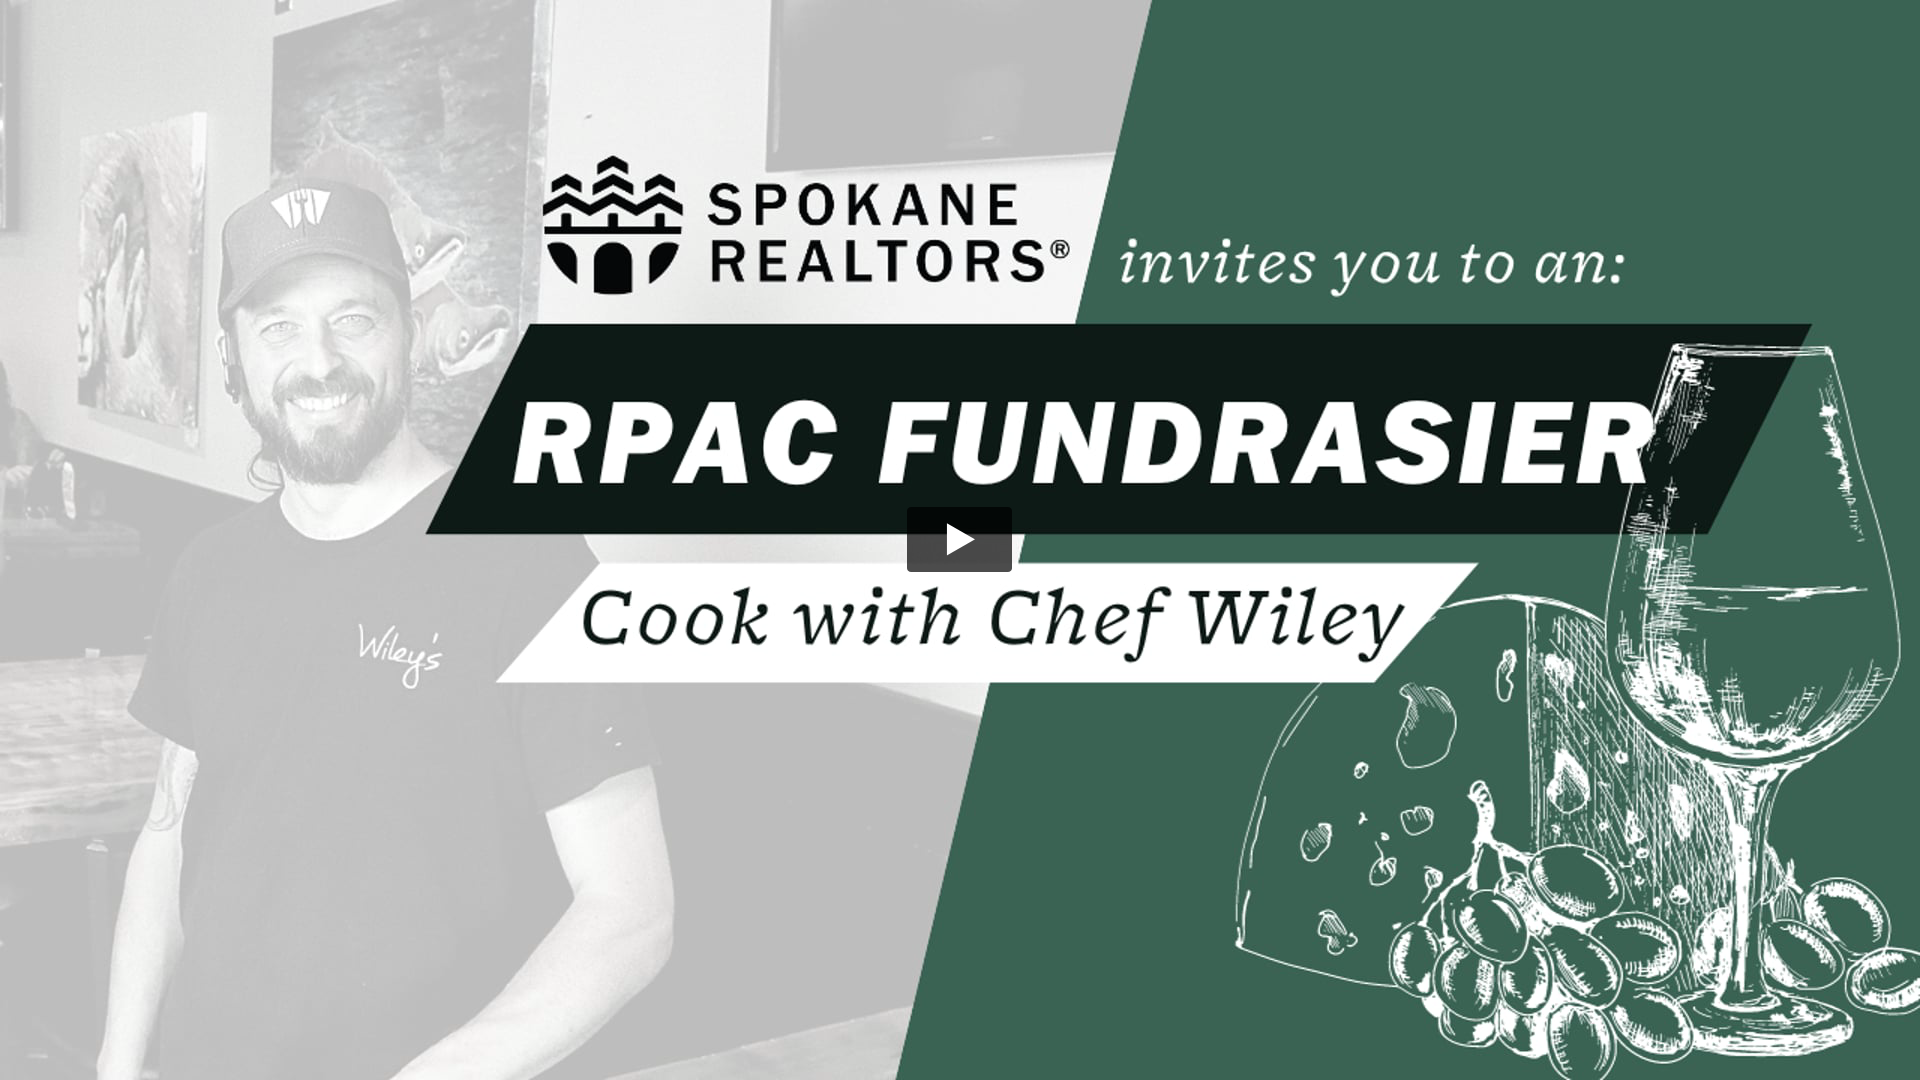 Video of Spokane REALTORS® RPAC fundraiser invitation.